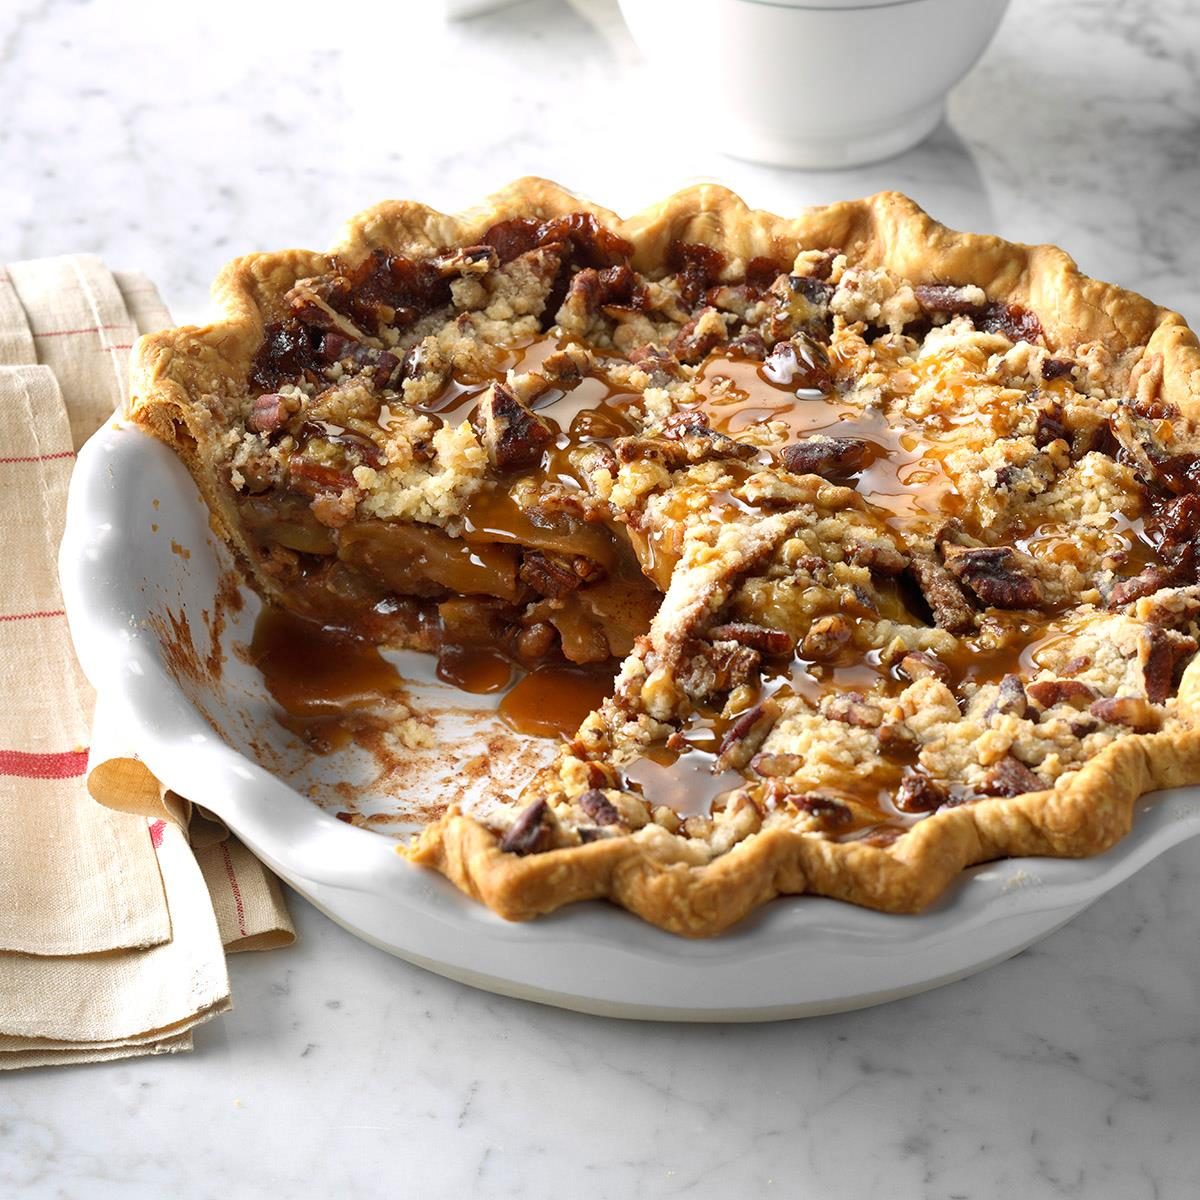 Caramel-Pecan Apple Pie Recipe: How to Make It